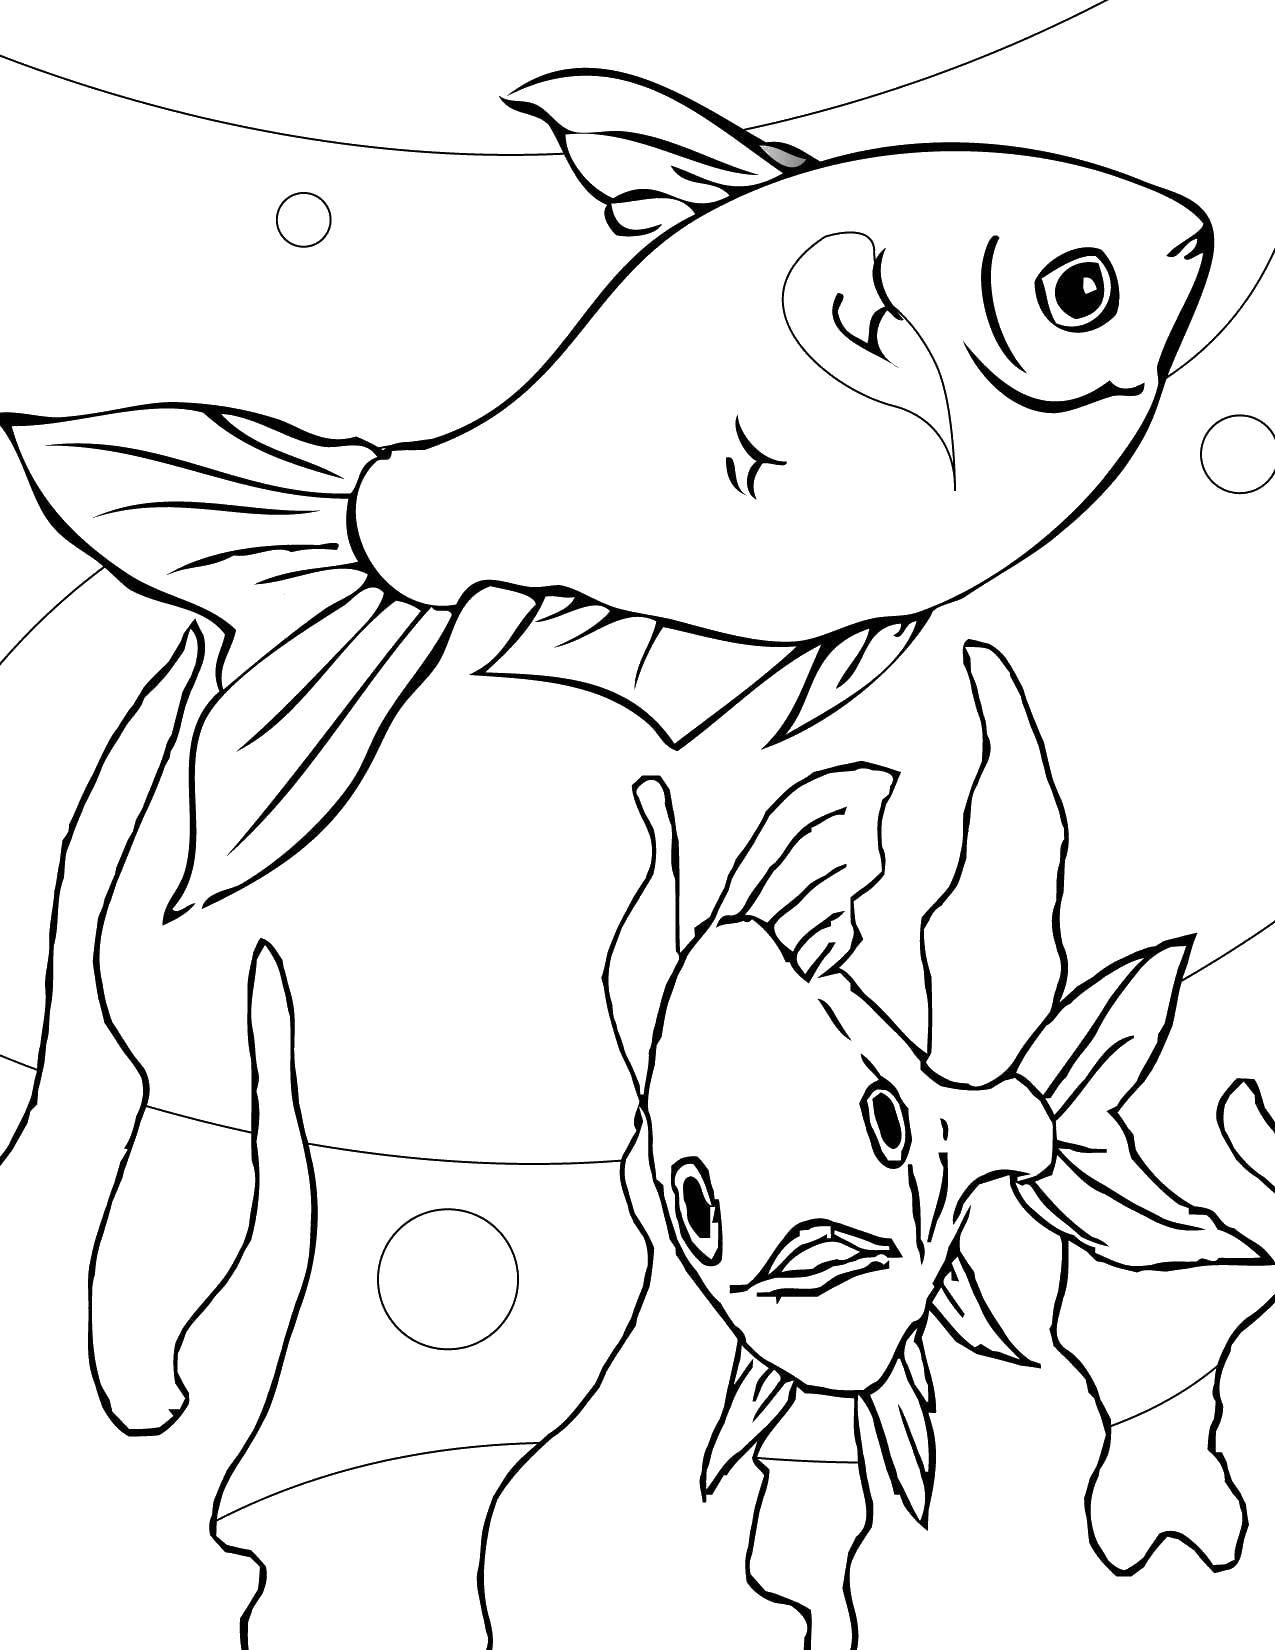 Название: Раскраска Рыбки плавают в аквариуме. Категория: рыбы. Теги: Аквариум, рыба, вода, пузыри.